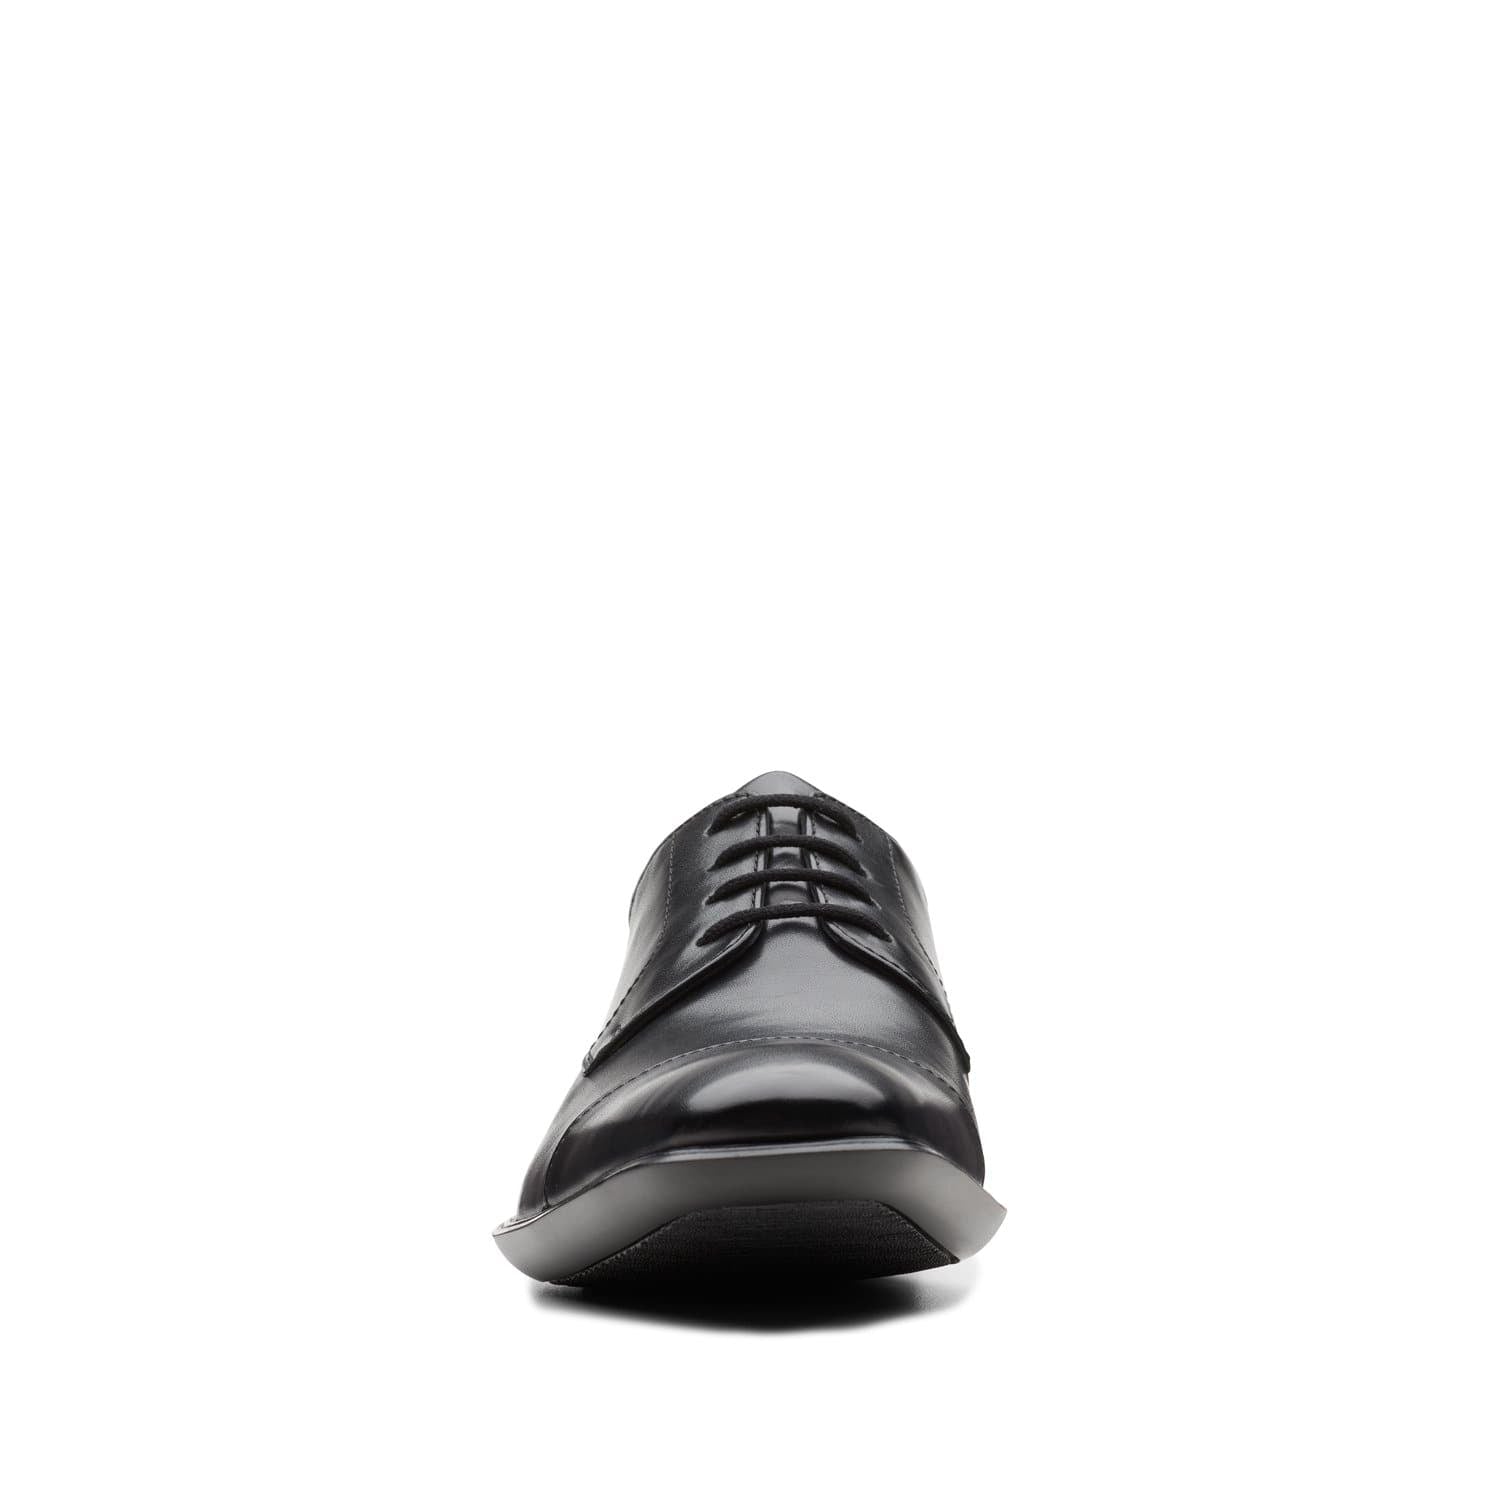 Clarks-Bensley-Cap-Men's-Shoes-Black-Leather-26147713